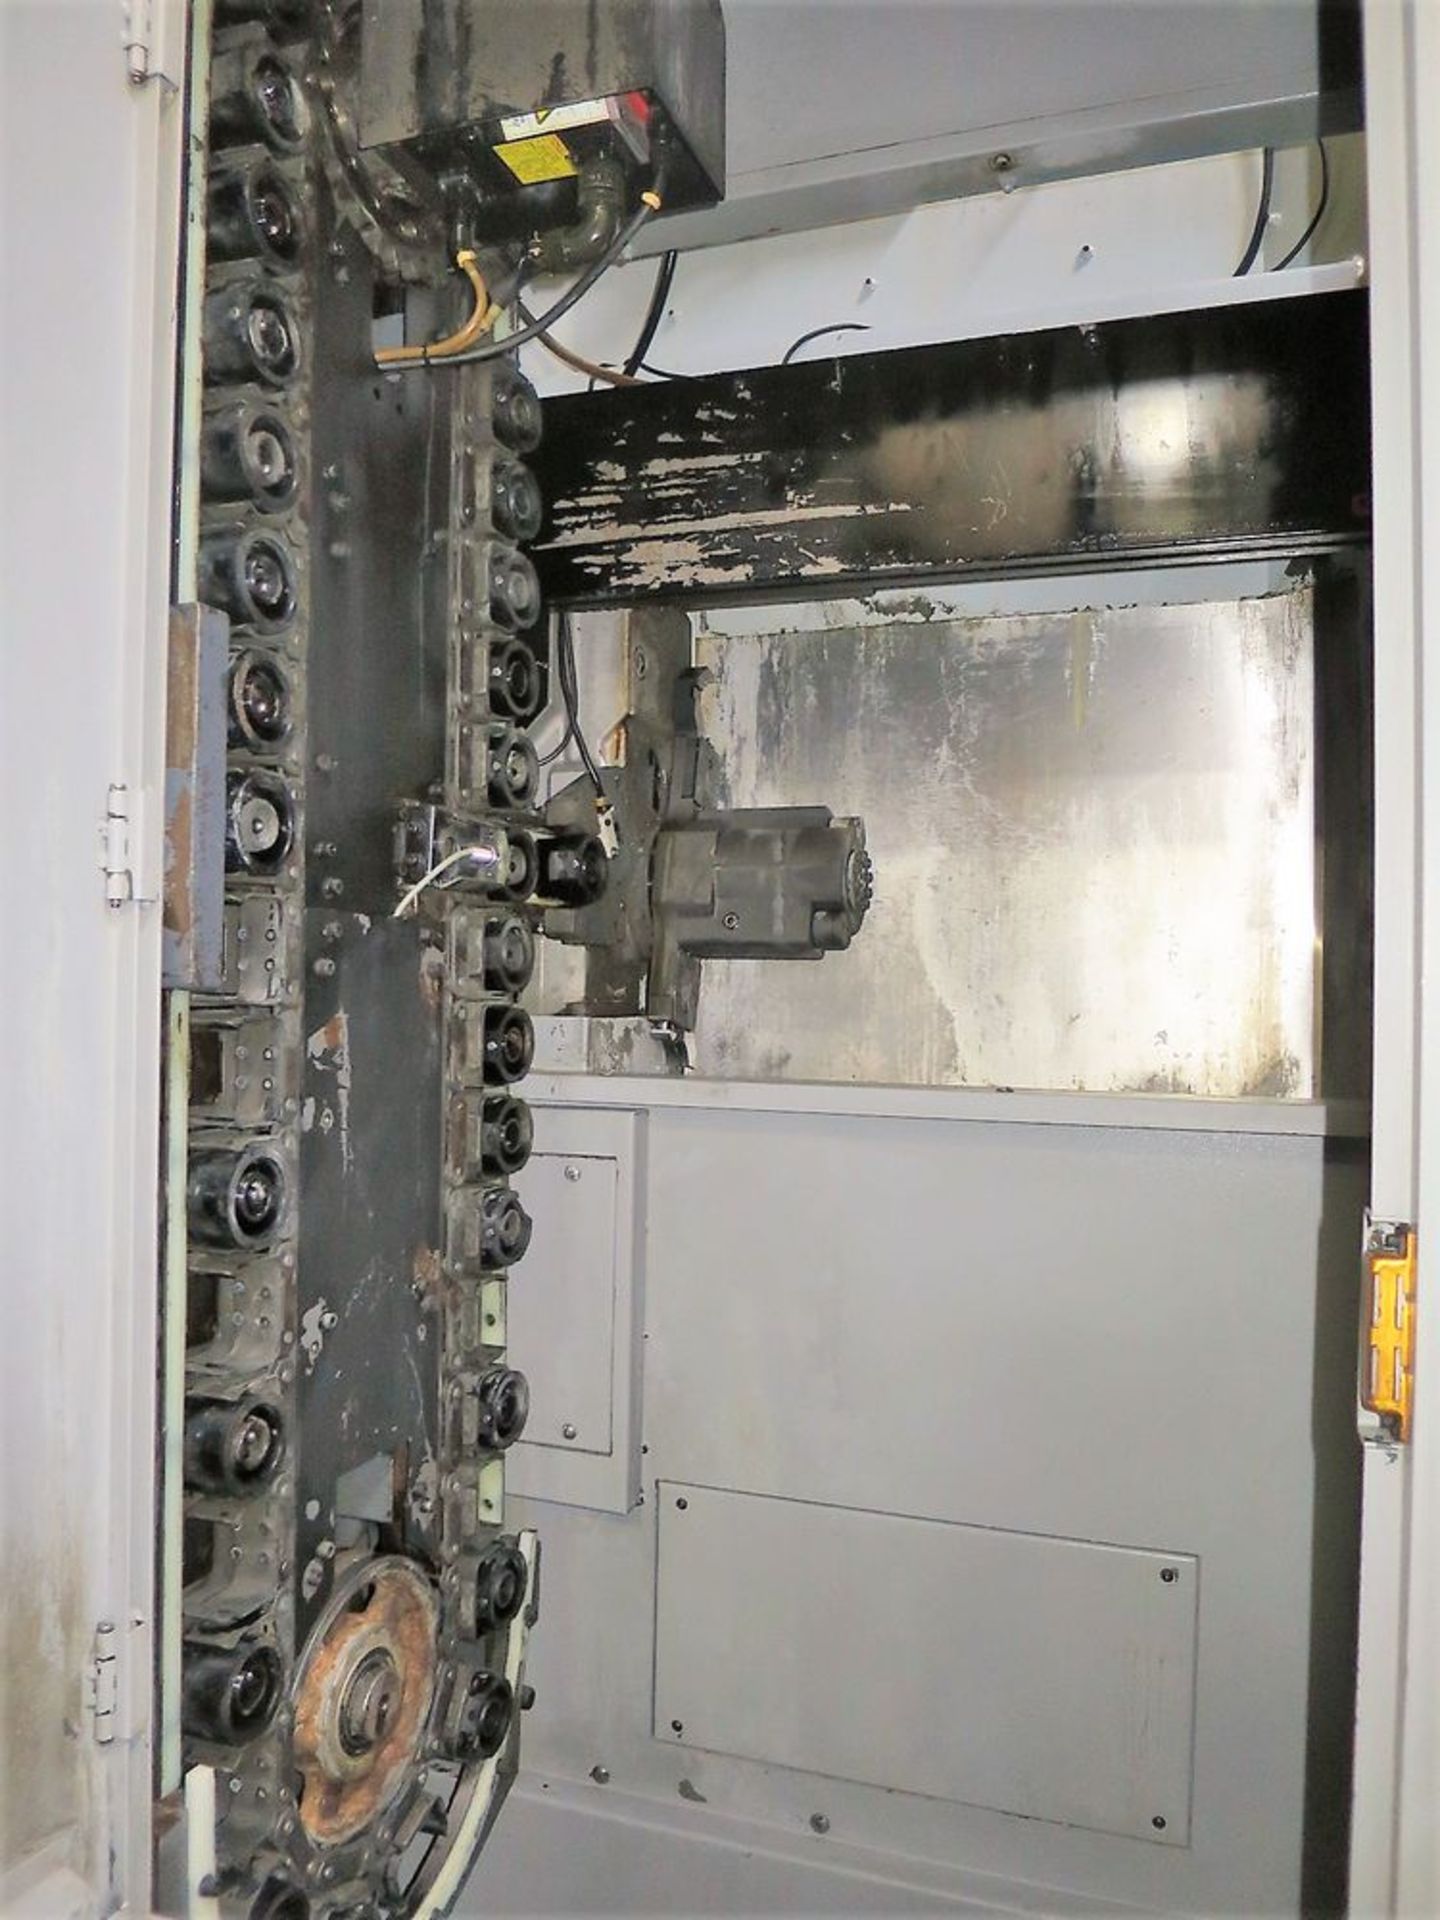 MORI SEIKI NH5000/40 DCG CNC PRECISION SPEED HORIZONTAL MACHINE - Image 7 of 11